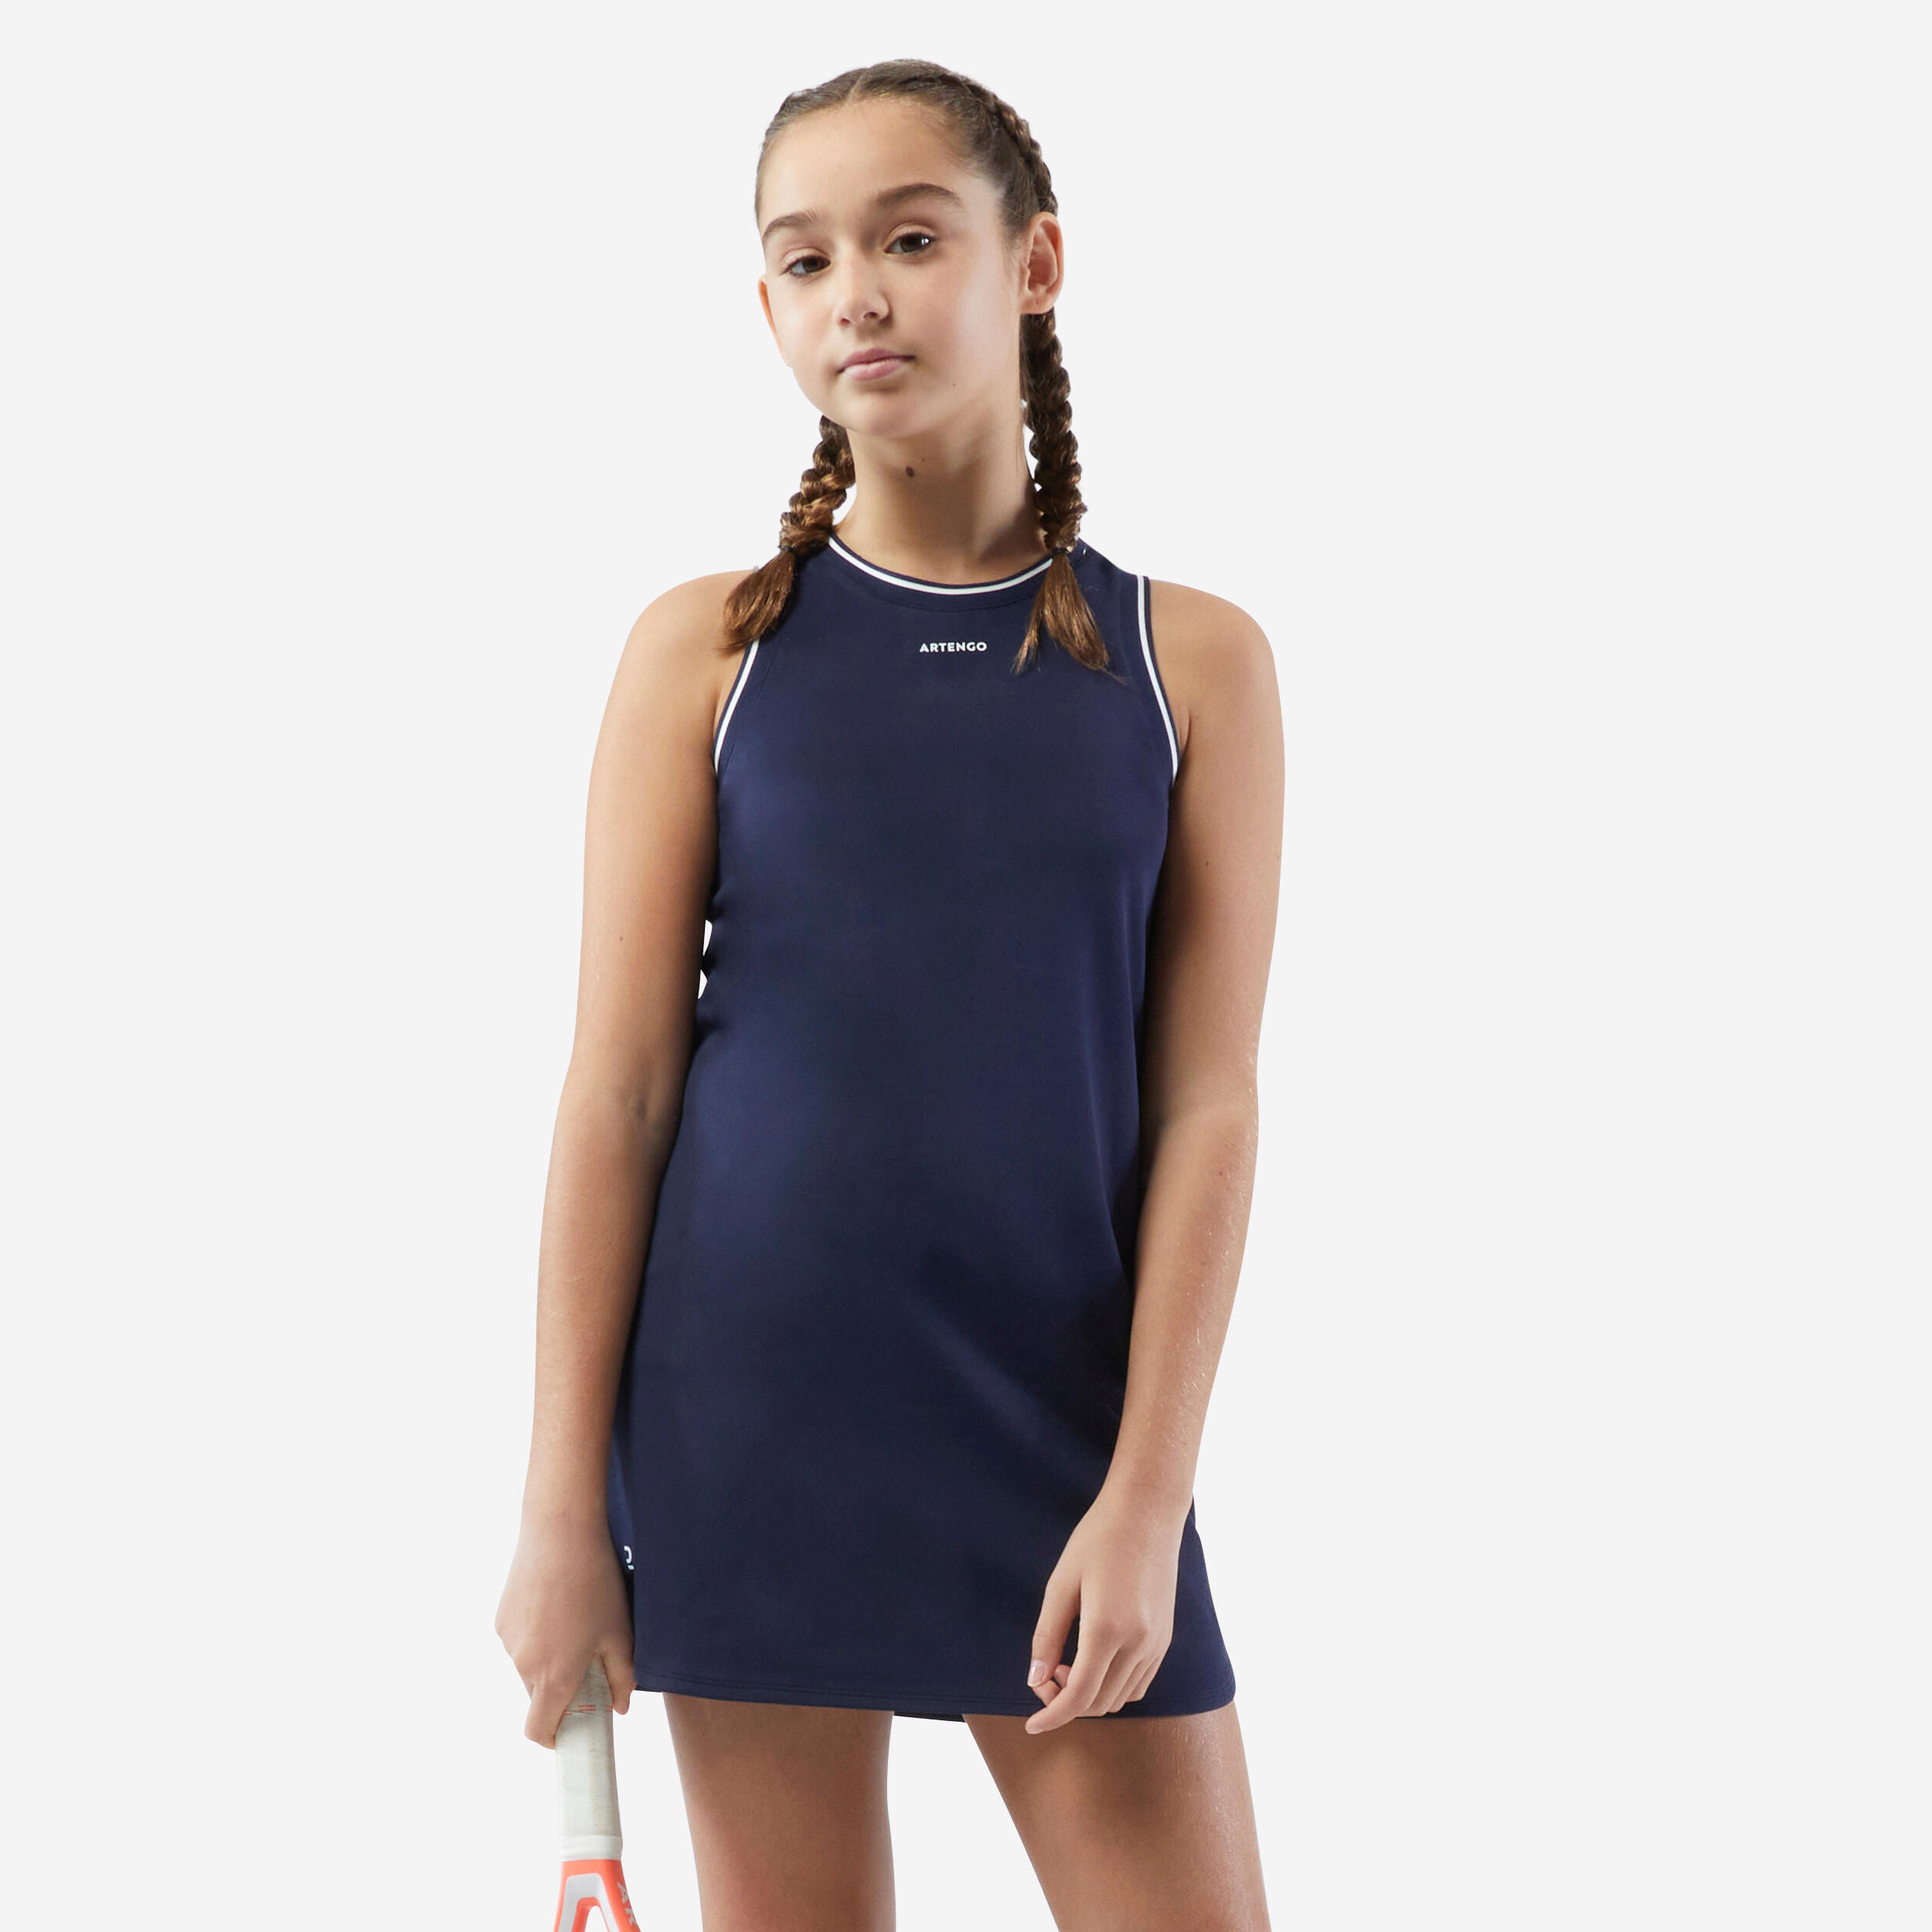 Girls' Straight-Cut Tennis Dress TDR 500 - Navy/White 1/7